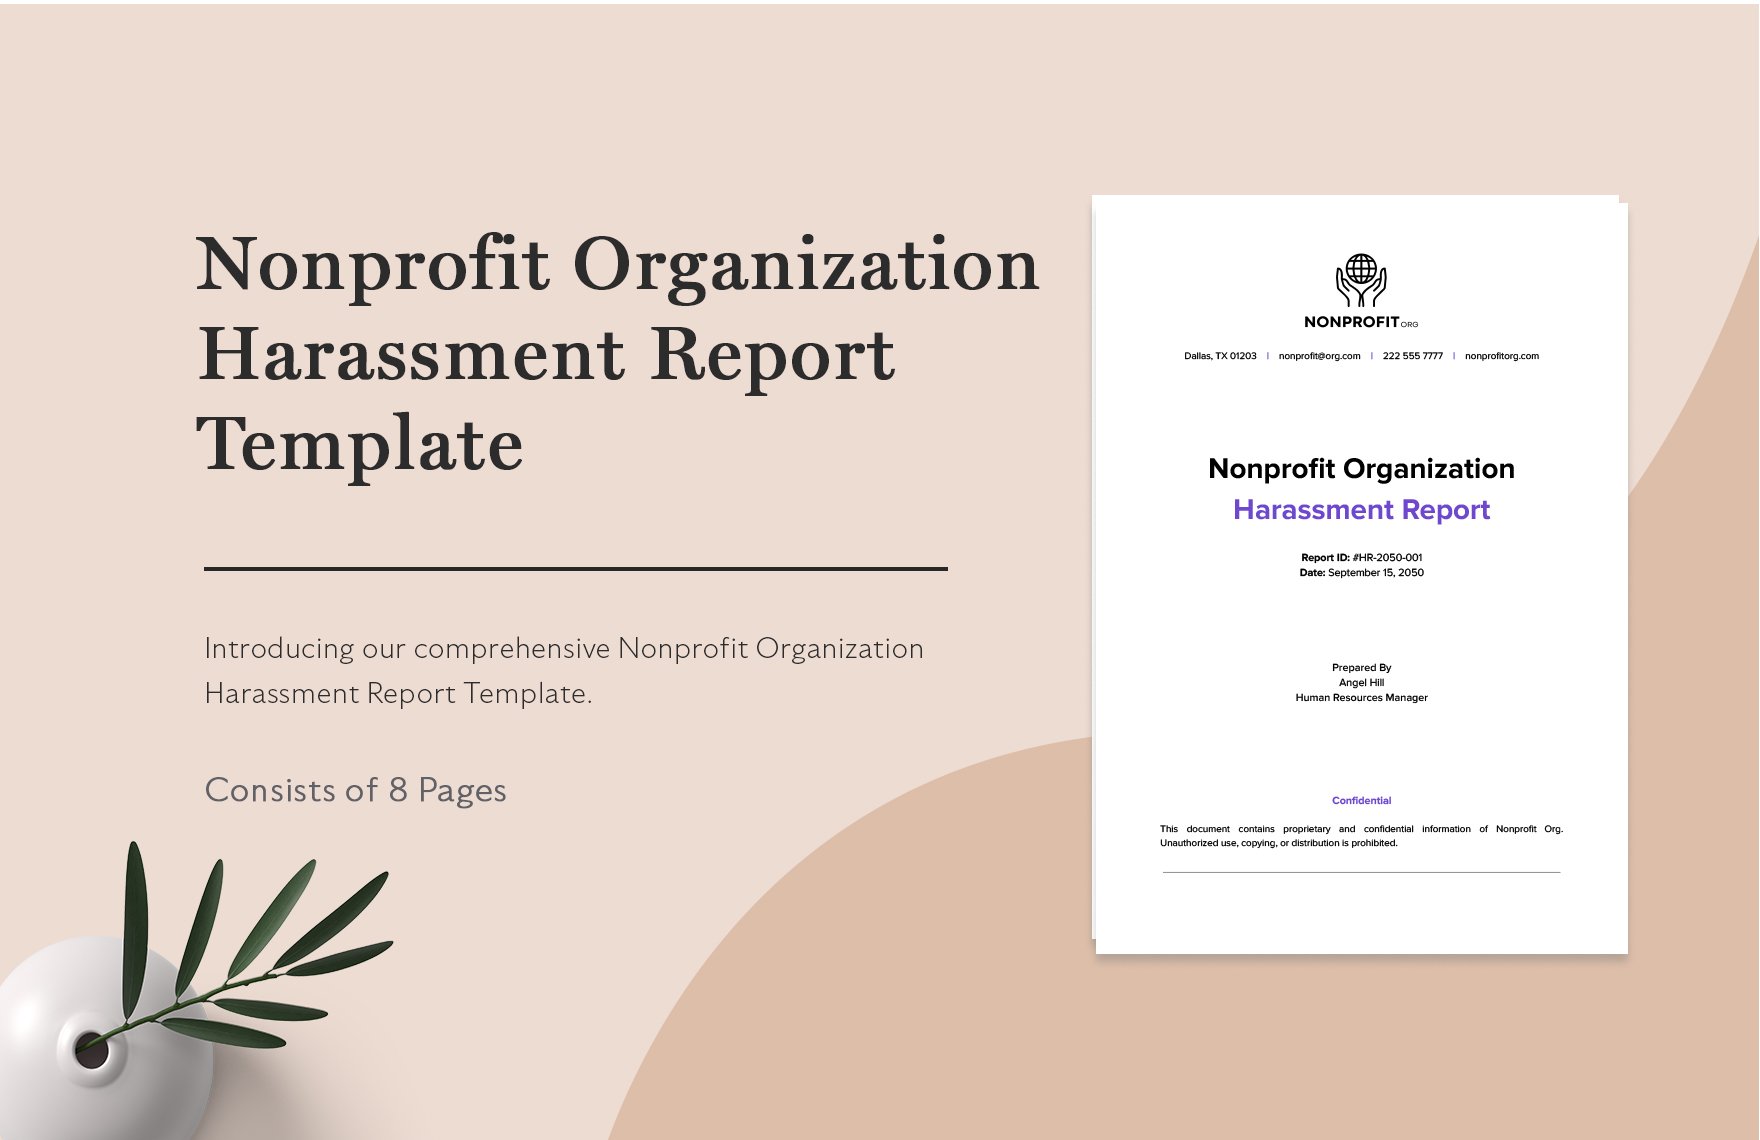 Nonprofit Organization Harassment Report Template in Word, Google Docs, PDF